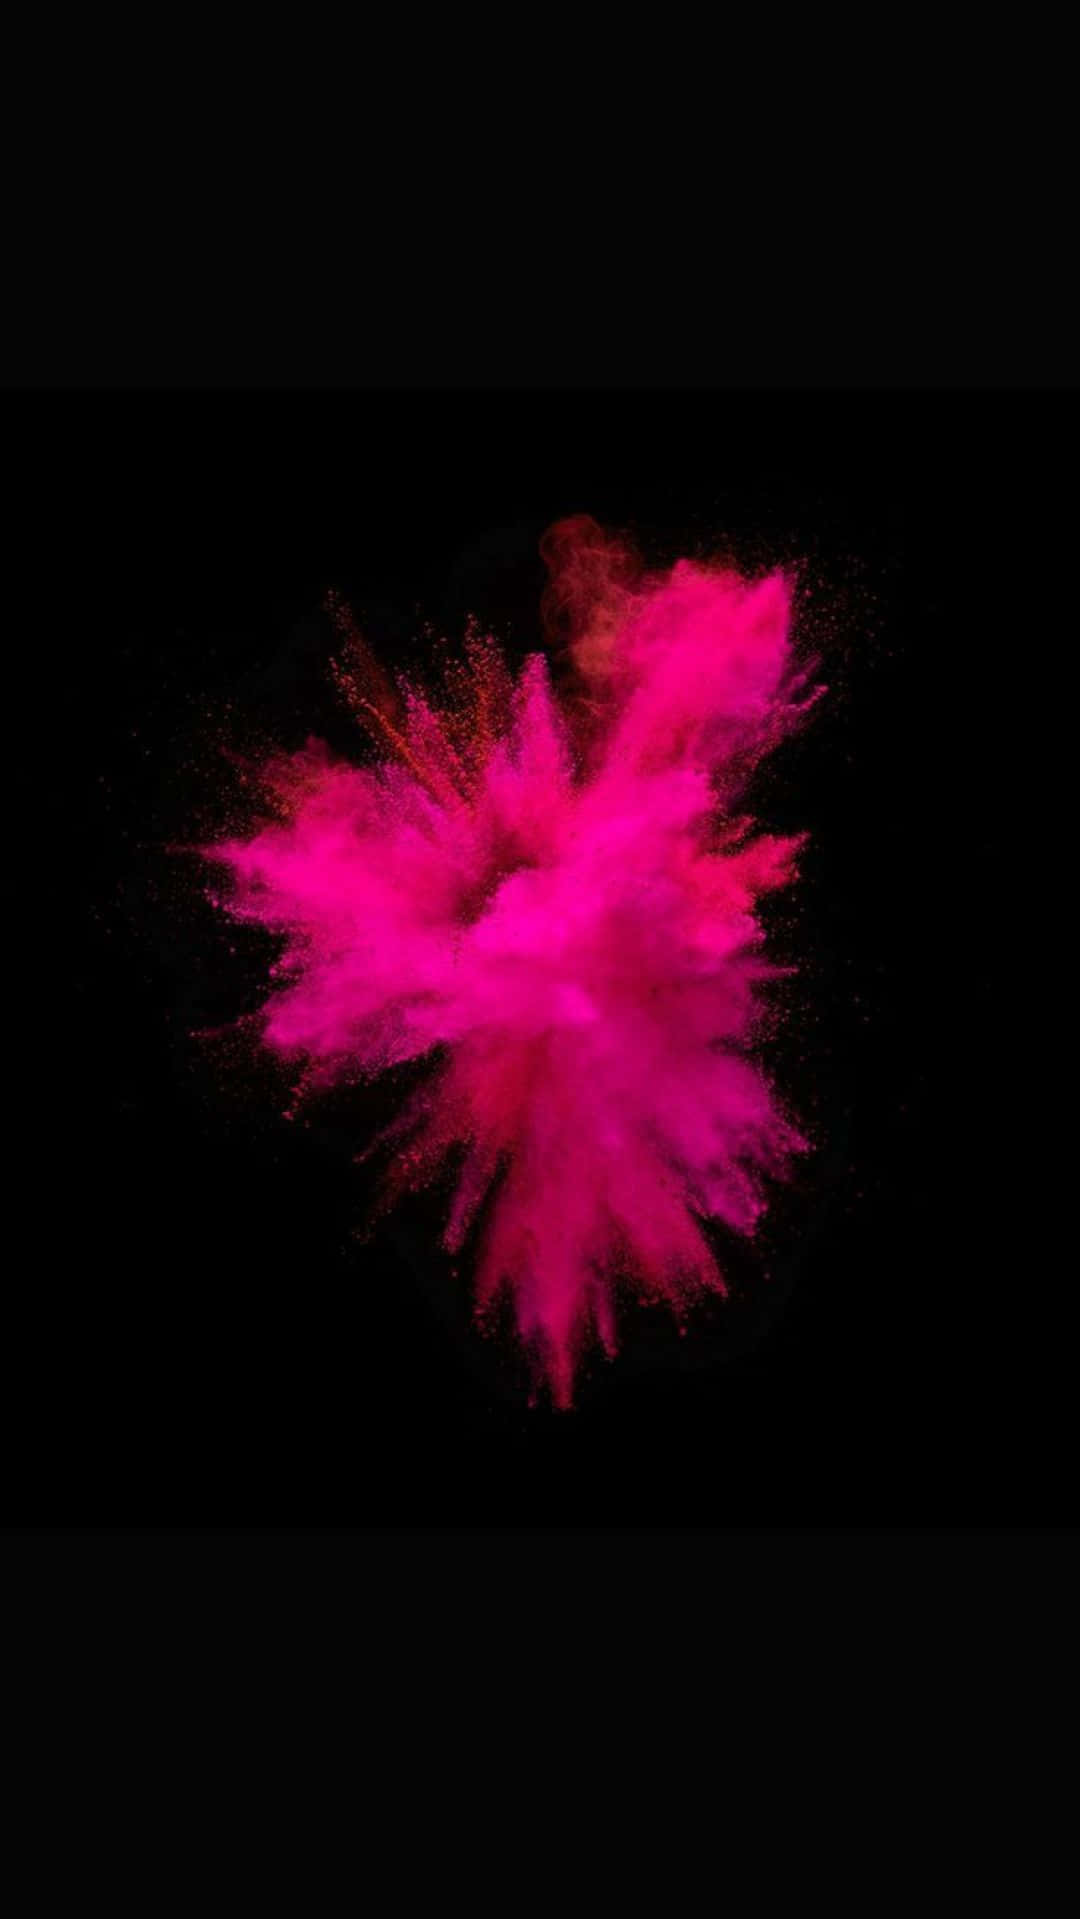 Pink Powder Explosion On Black Background